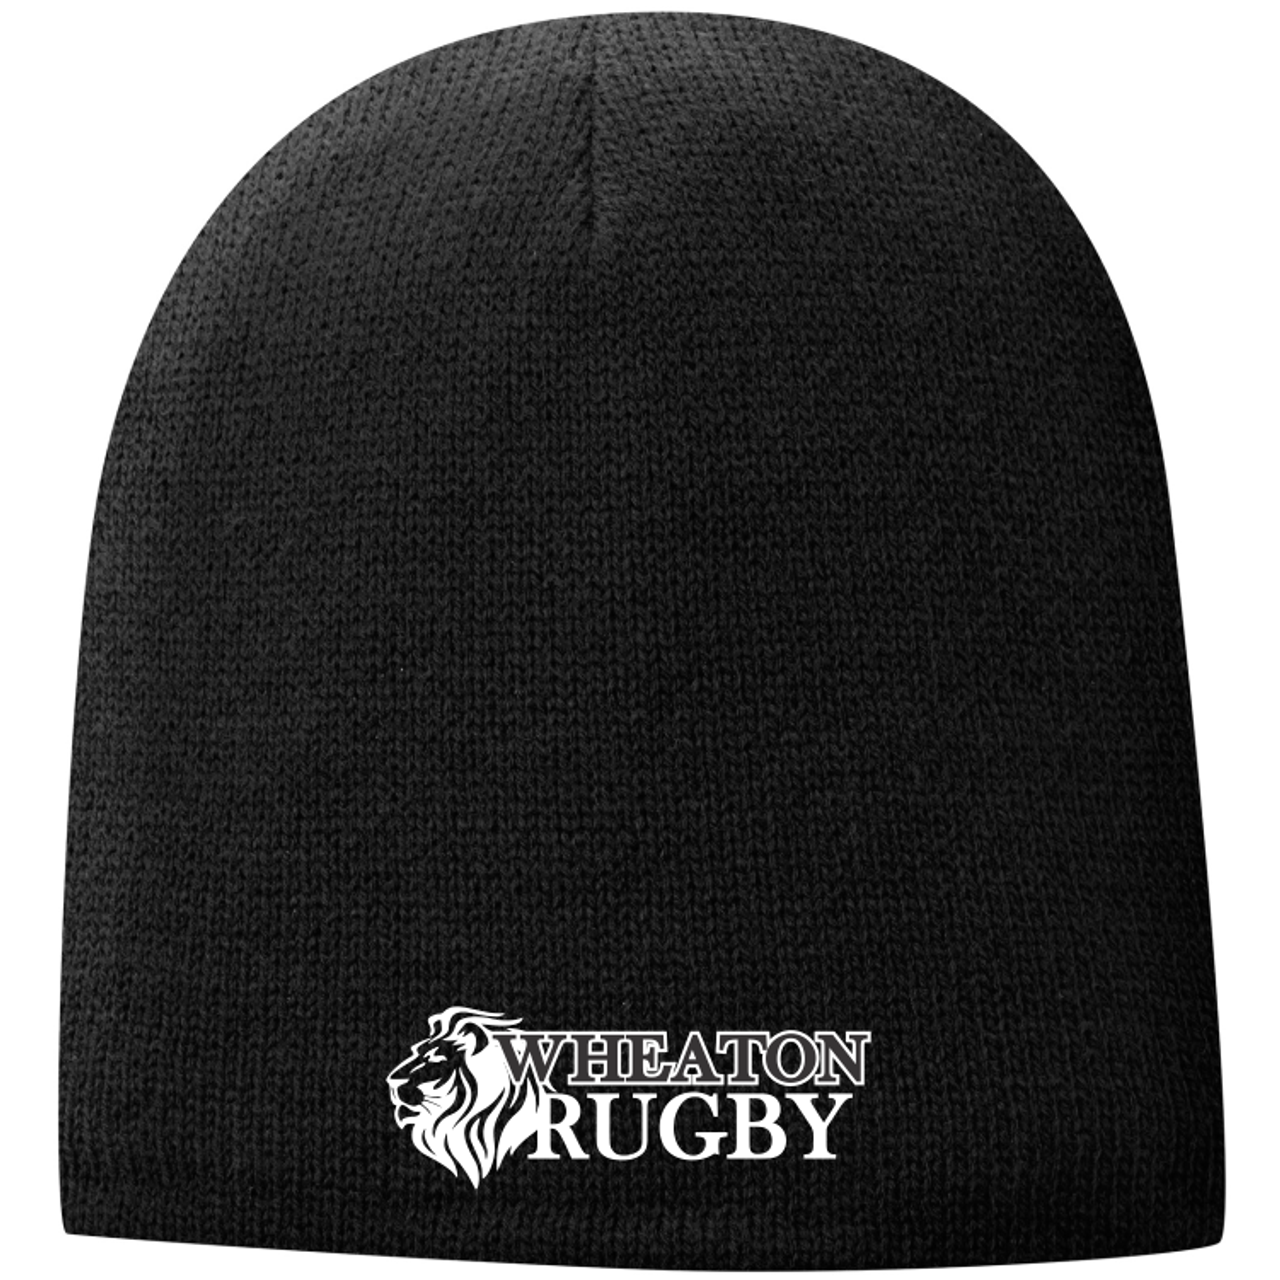 Wheaton Rugby Fleece-Lined Beanie, Black